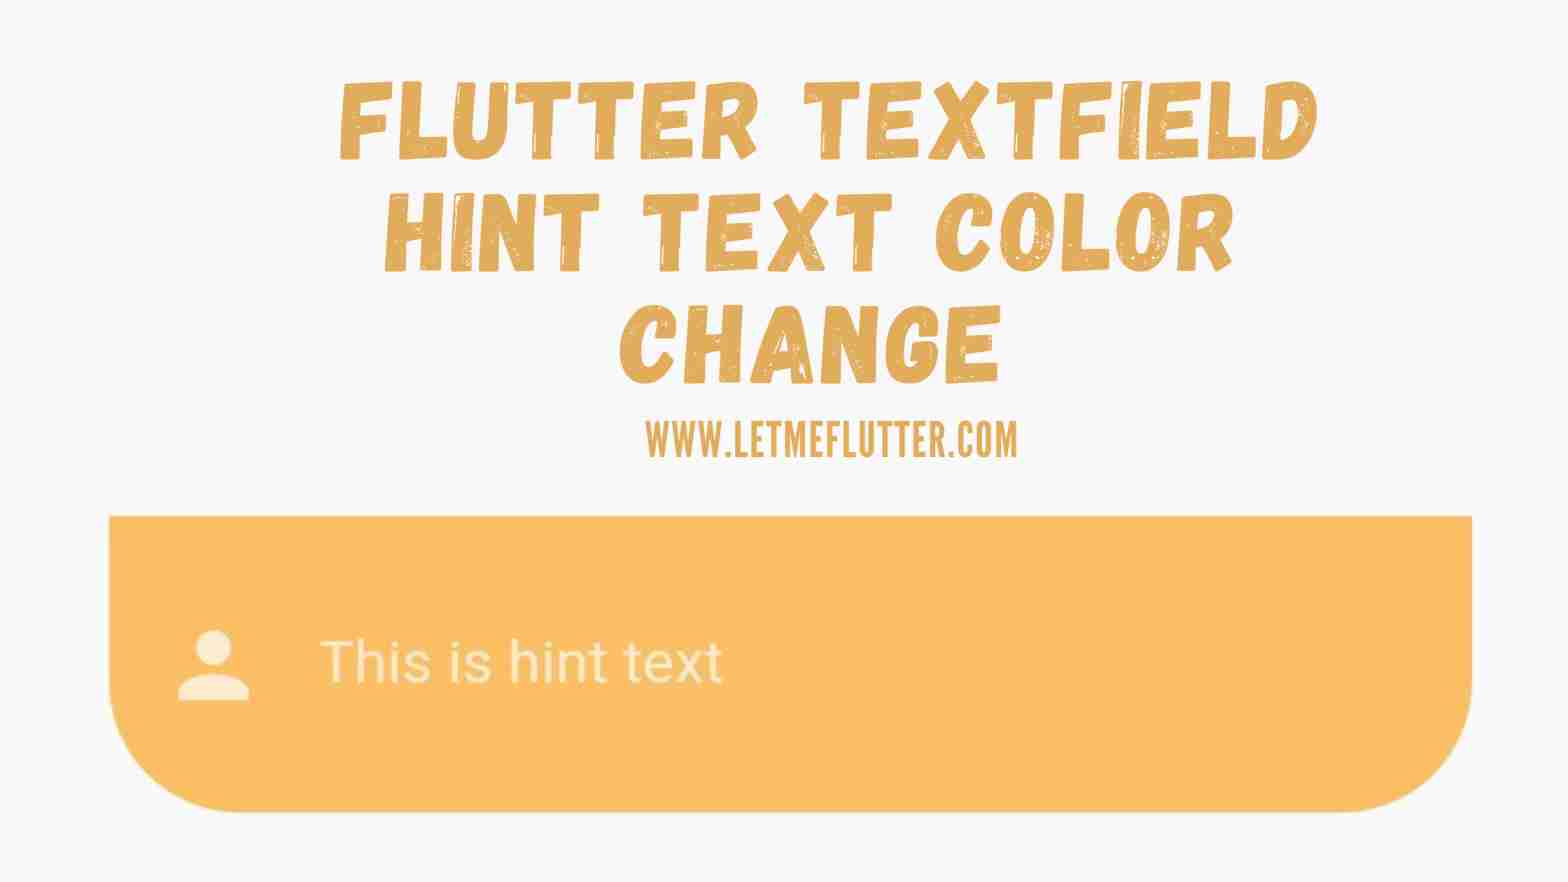 flutter textfield hint text color